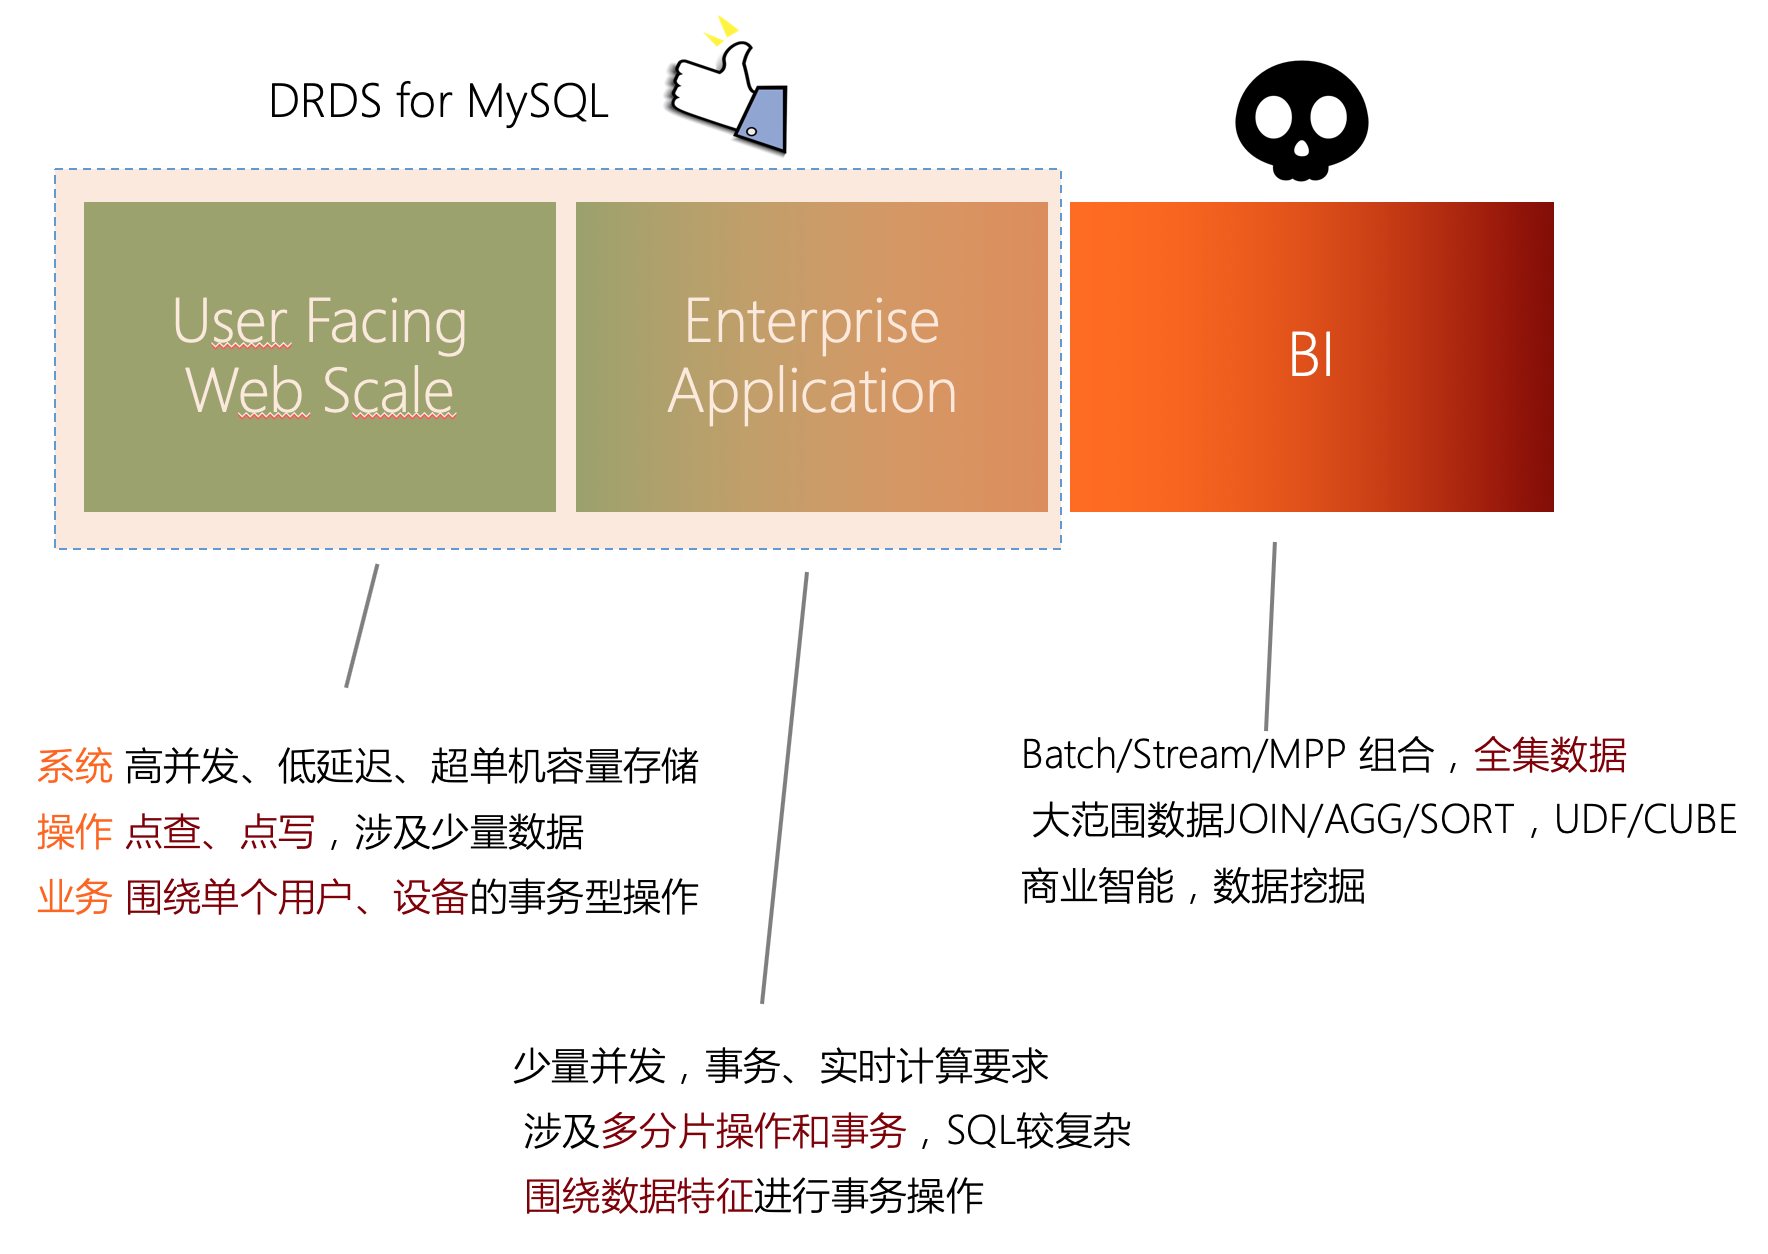 DRDS FOR MYSQL